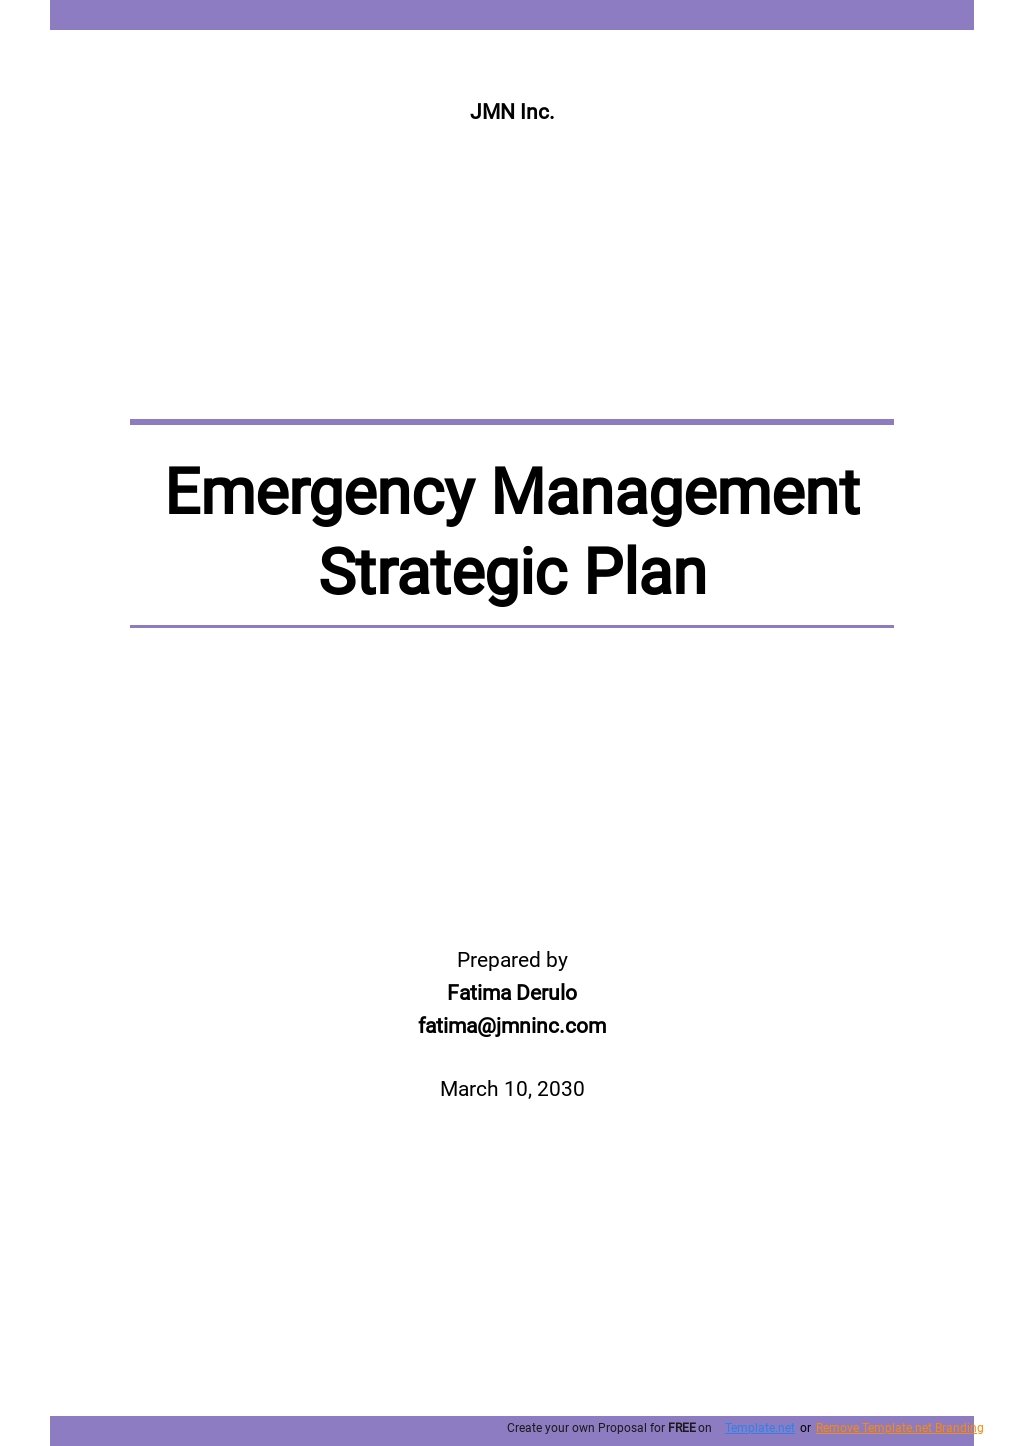 Emergency Management Strategic Plan Template